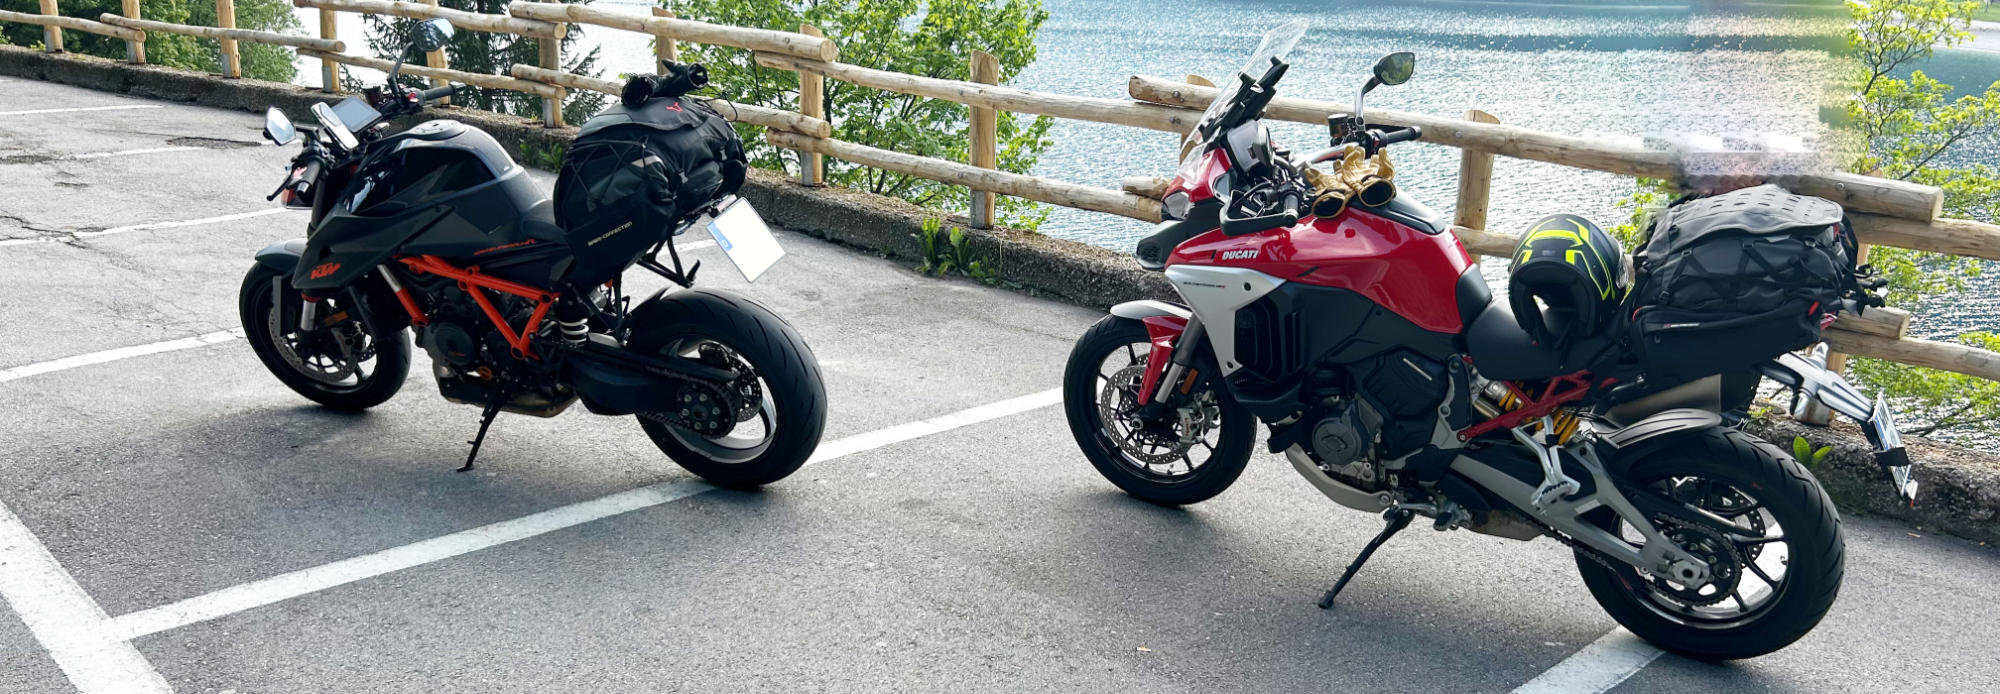 Italien – eine Motorradtour Gardasee, Rapallo, Meran